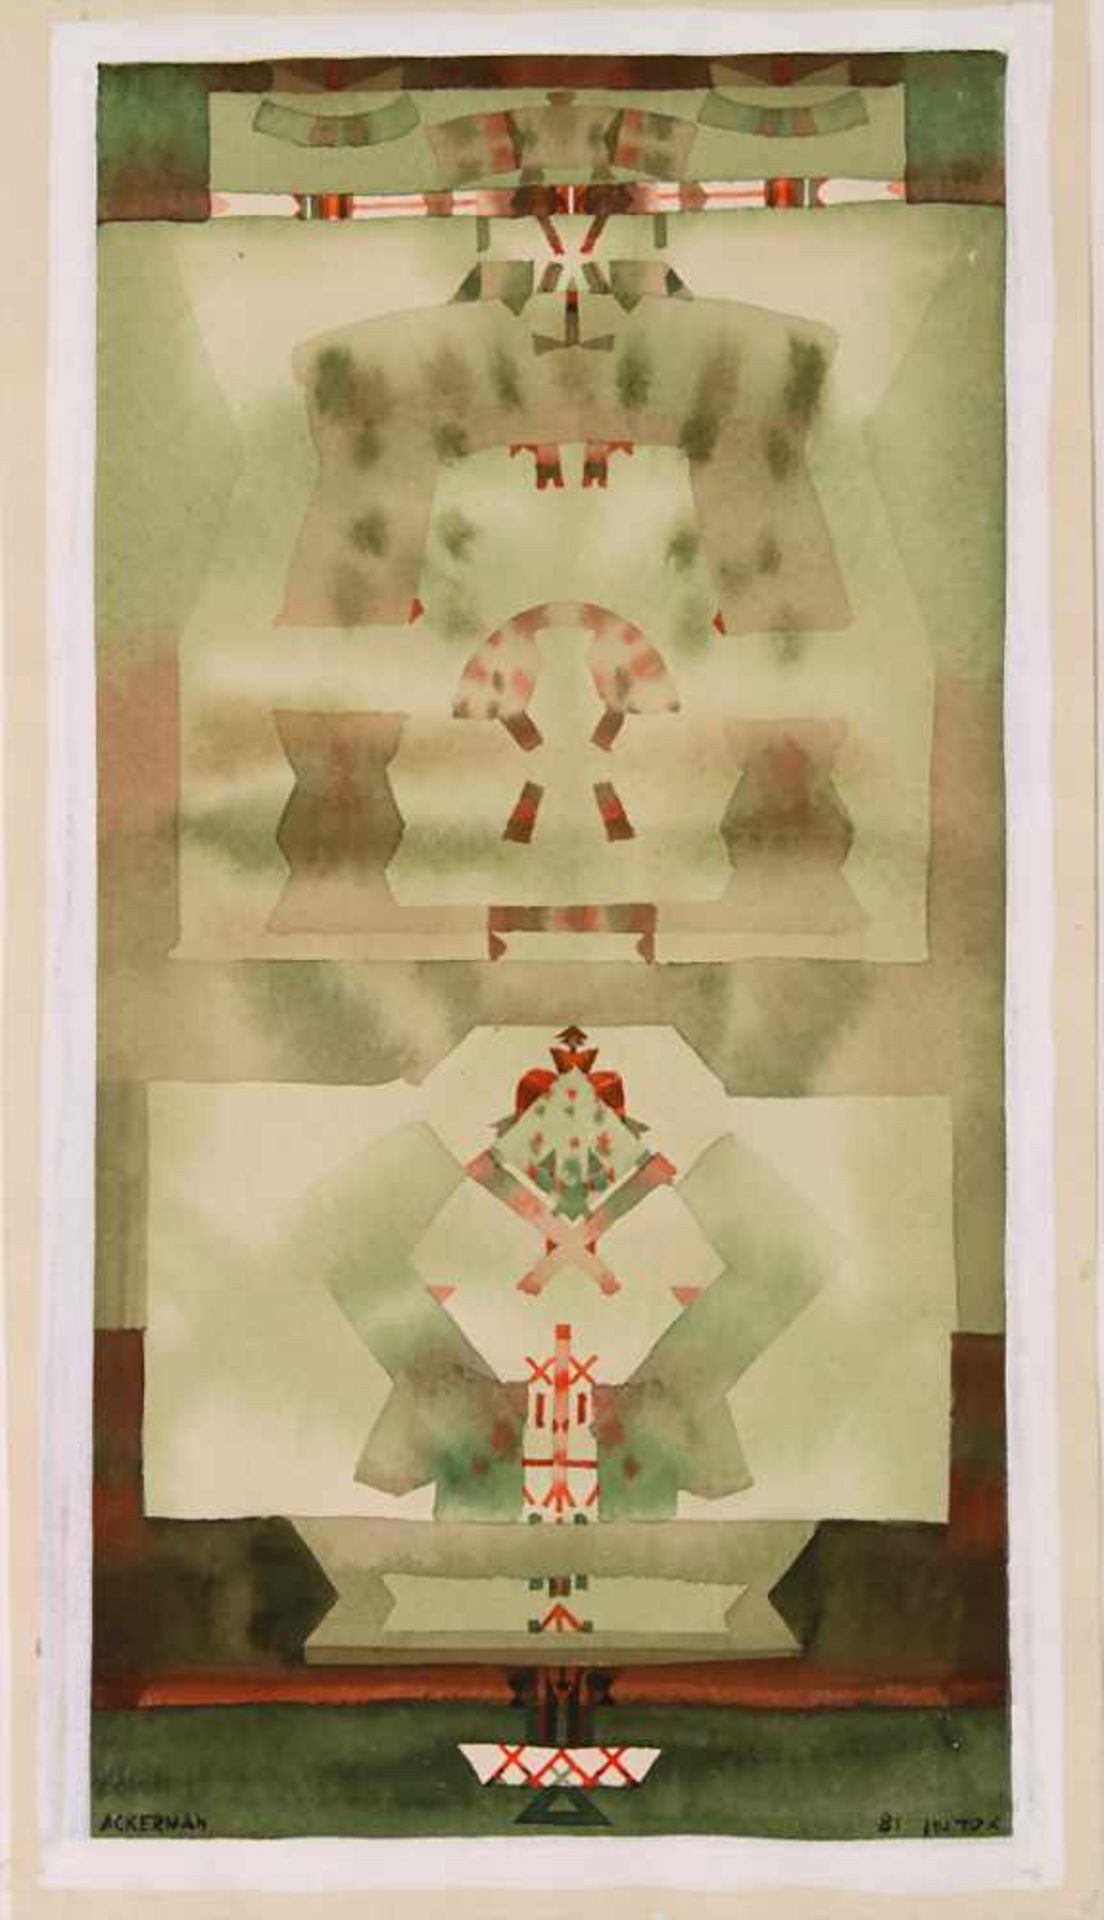 Samuel Ackerman (*1951), 'Abstrakte Komposition' / 'An abstract composition'Technik: Aquarell auf